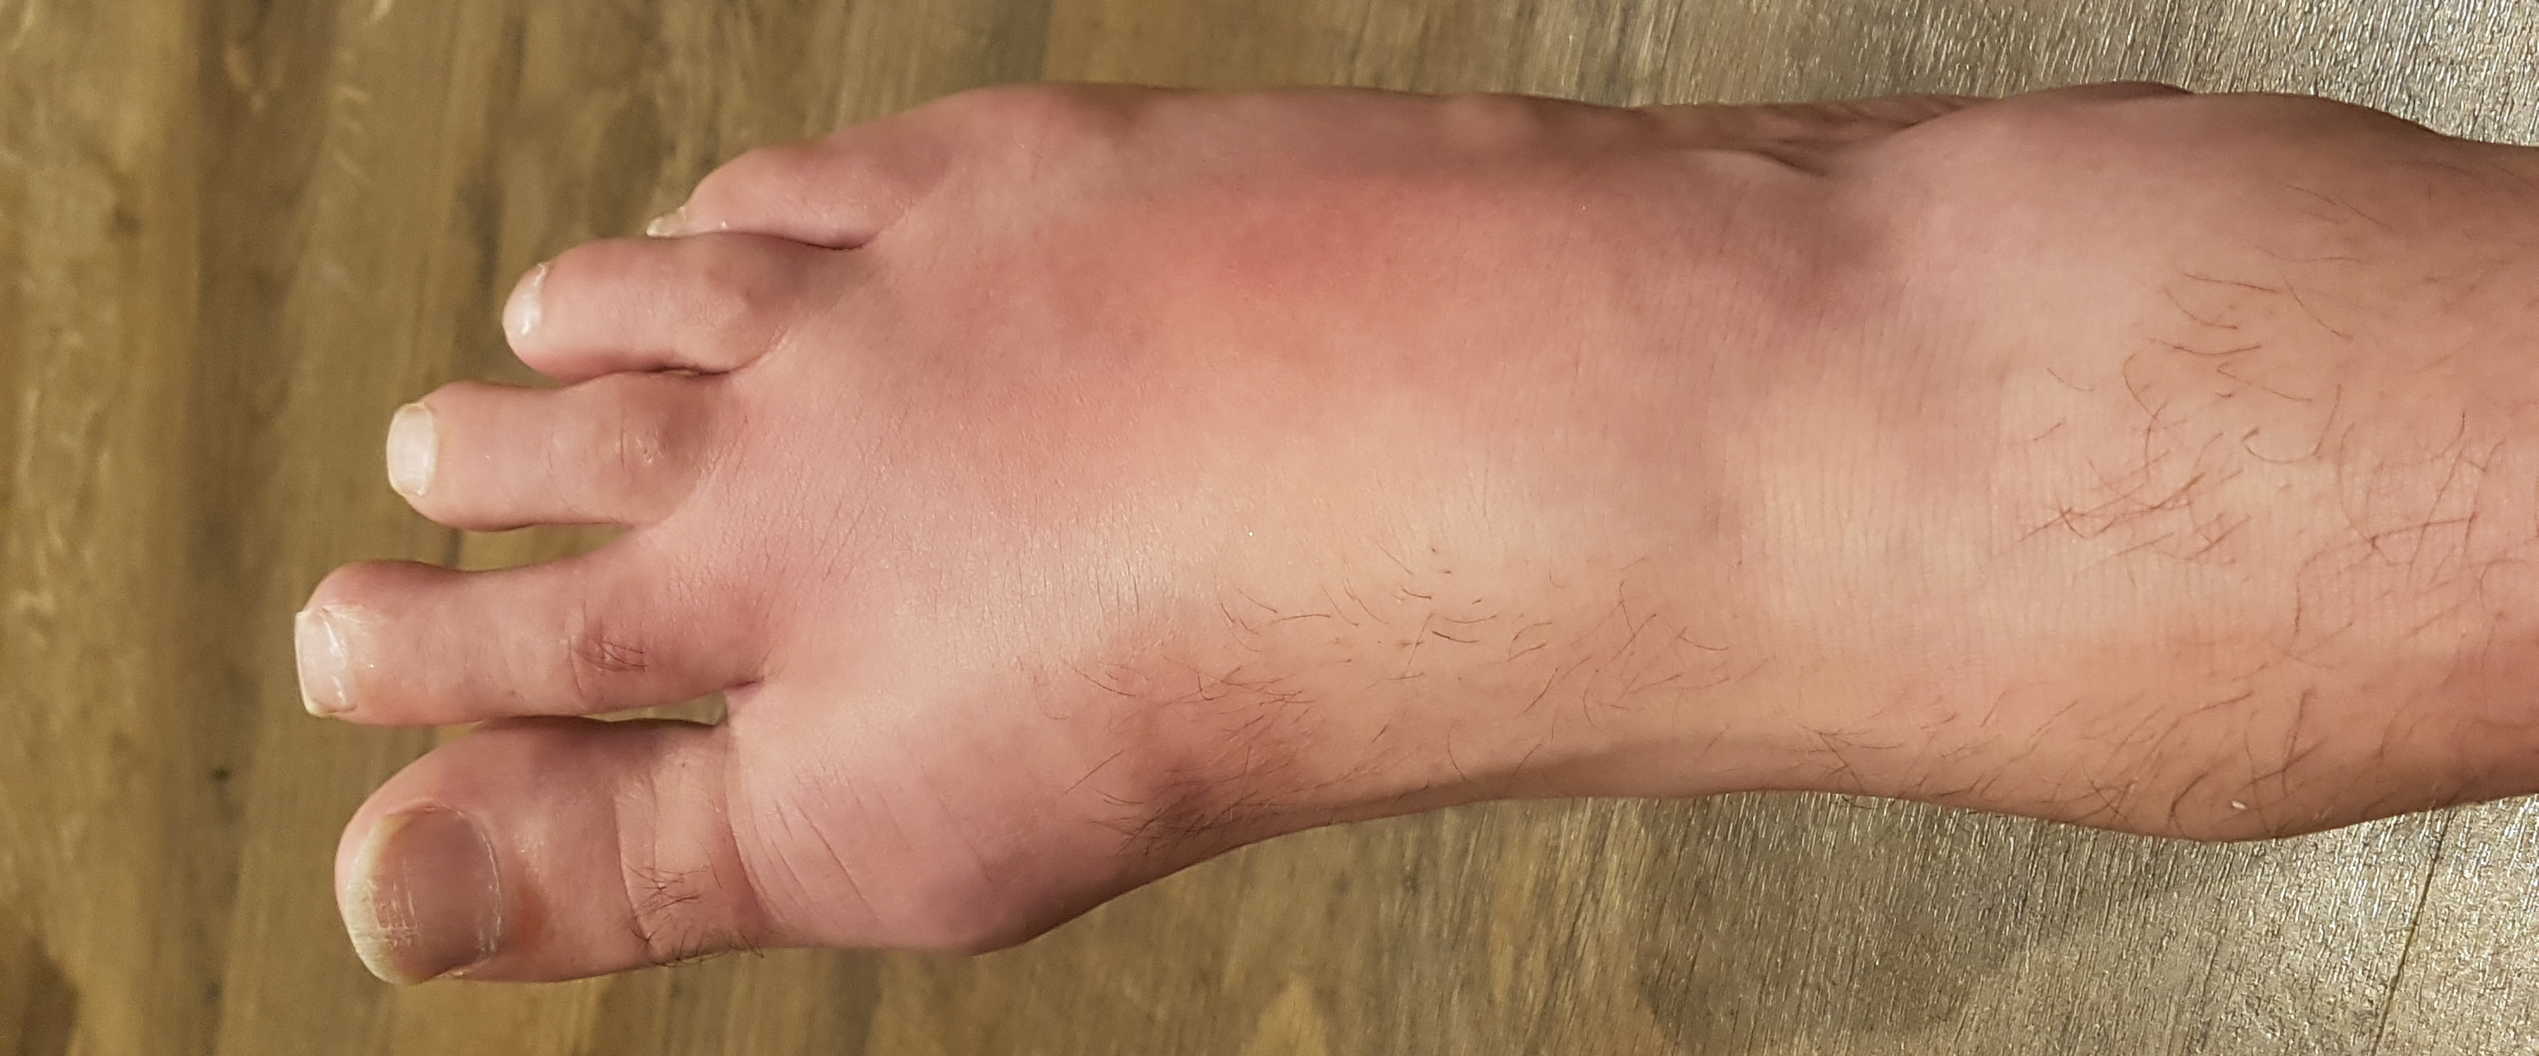 Gouty Foot